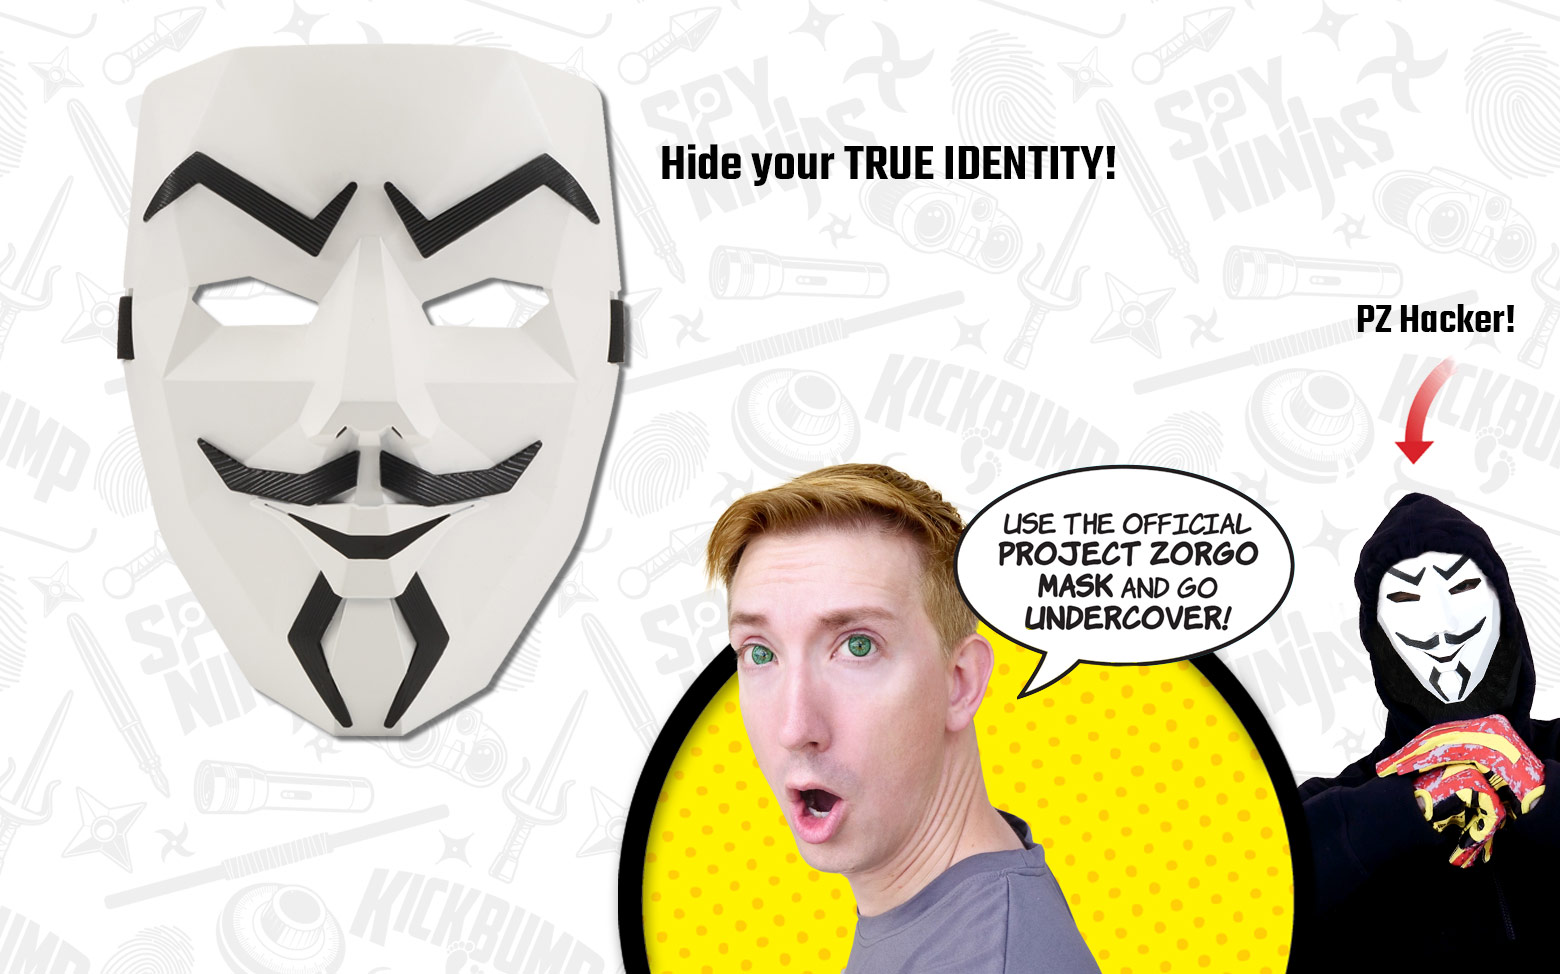 Project Zorgo Infiltration Mission Kit Spy Ninjas - hacker mask in roblox